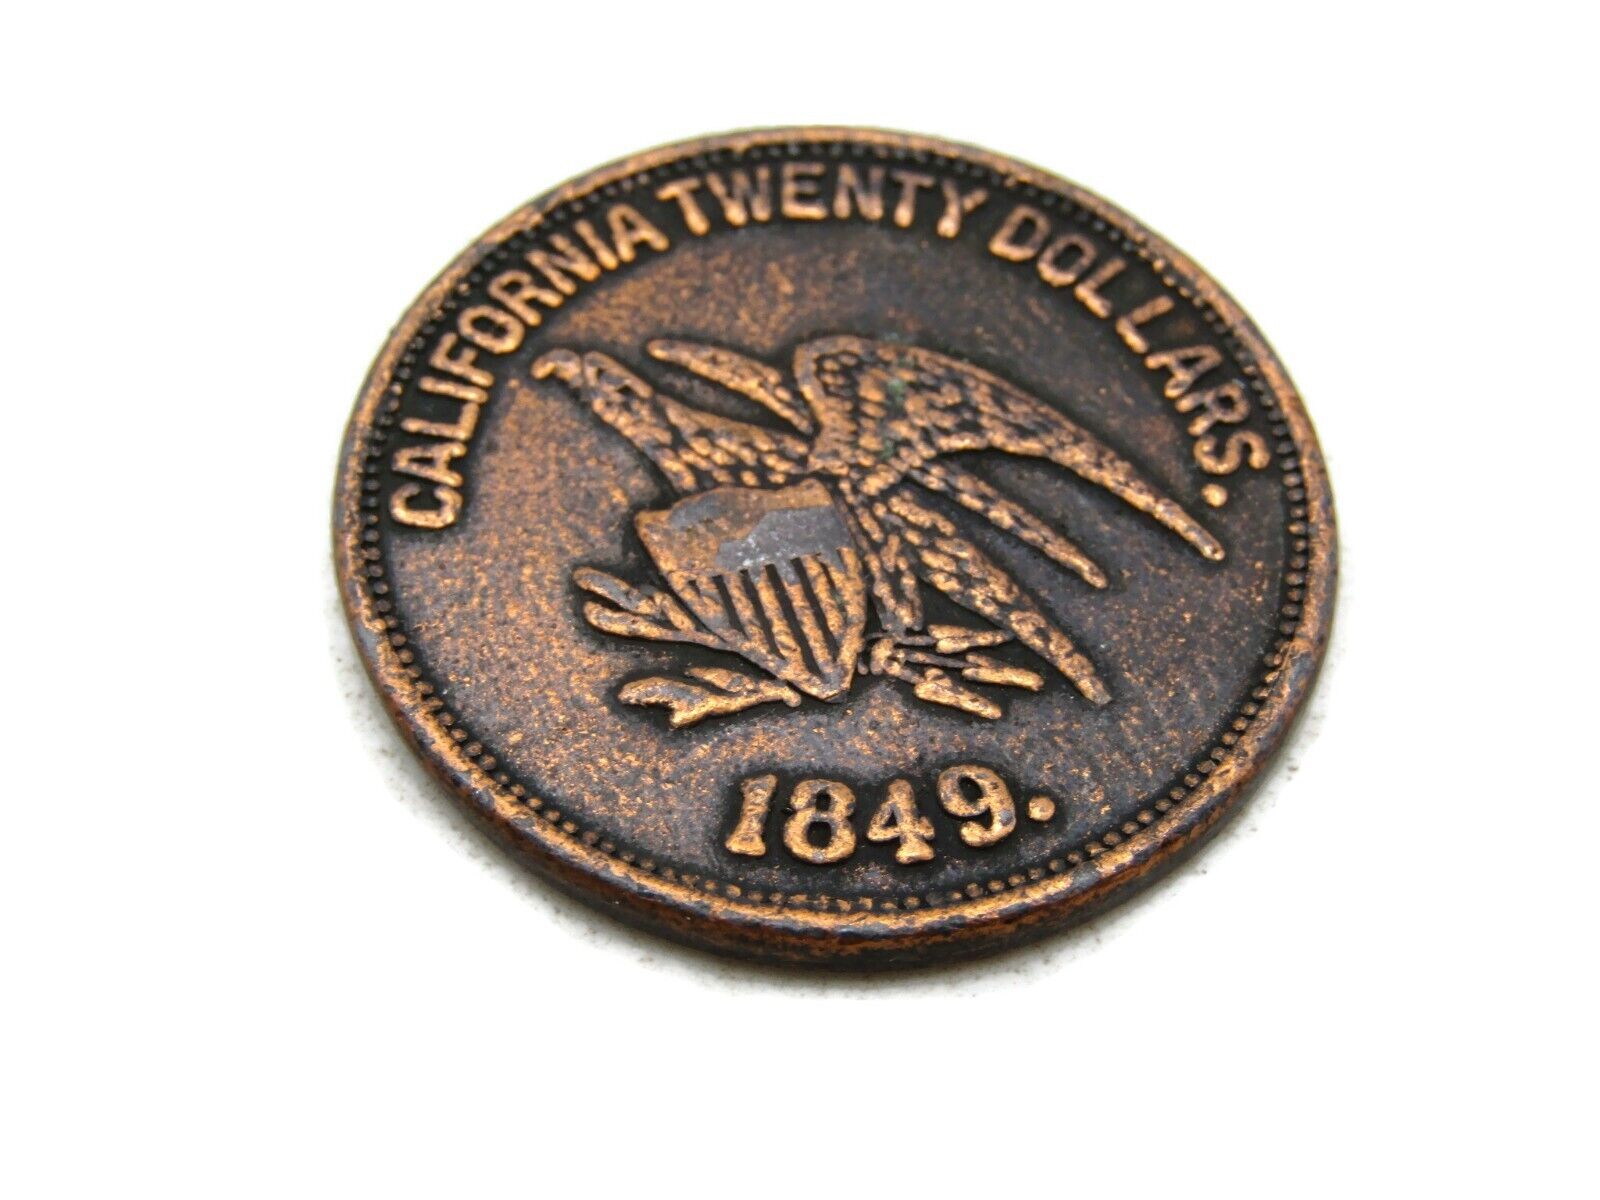 California Twenty Dollars 1849 Coin Cincinnati Mining & Trading Company